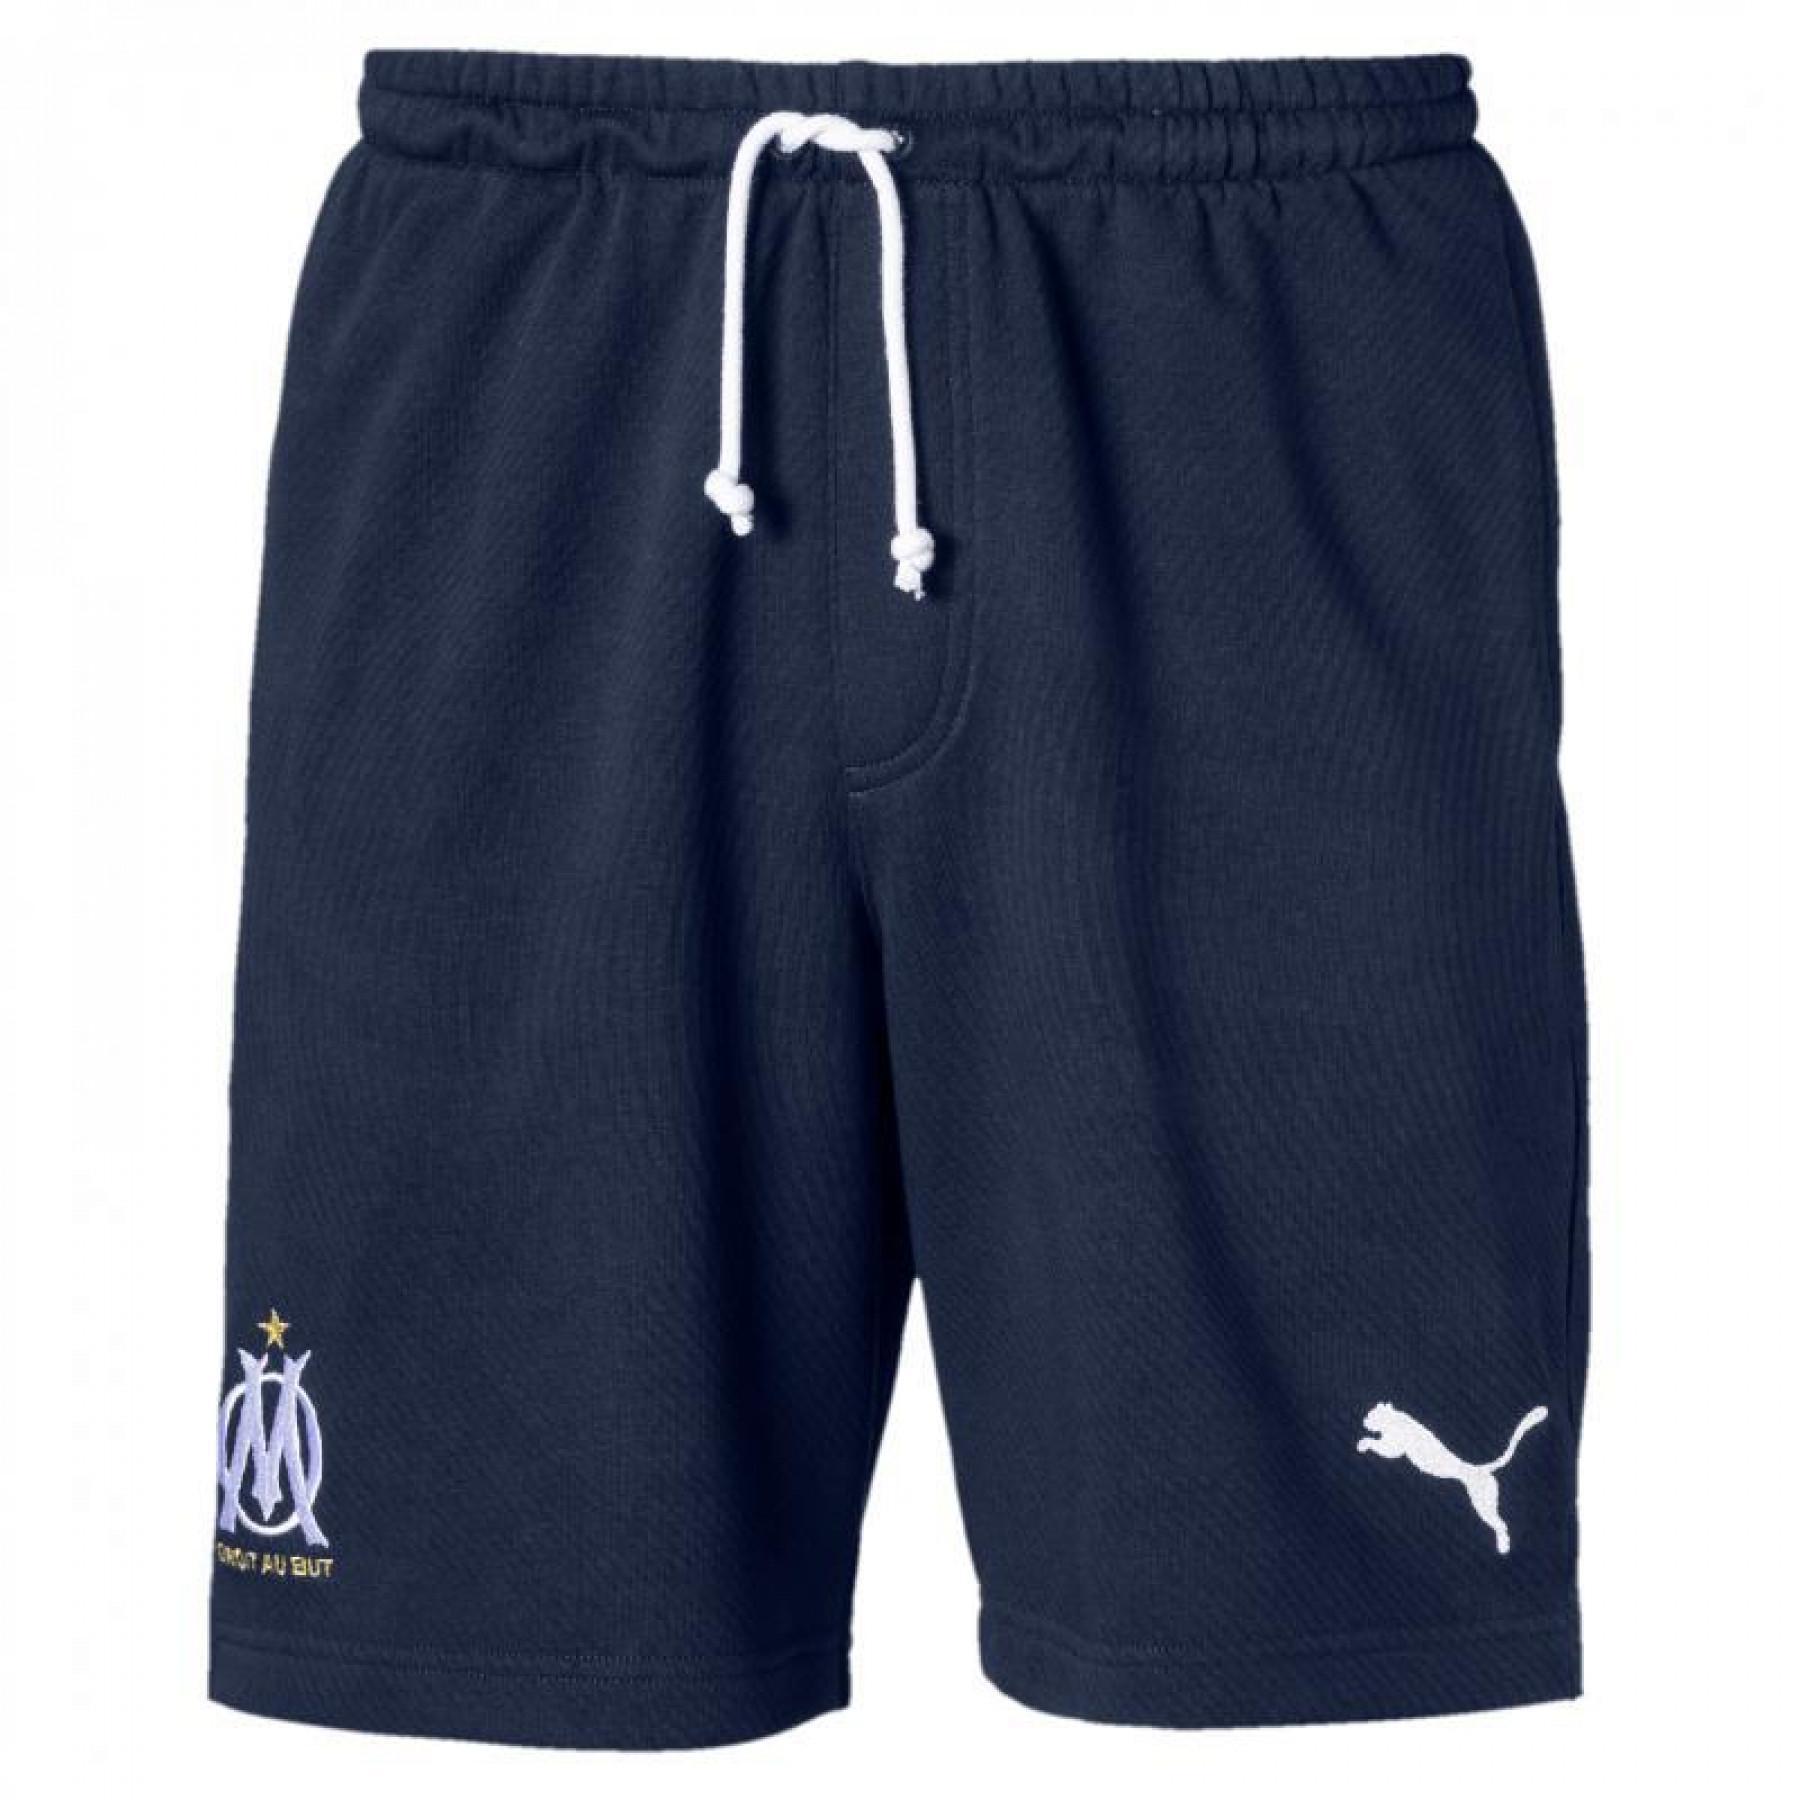 Casual shorts OM 2019/20